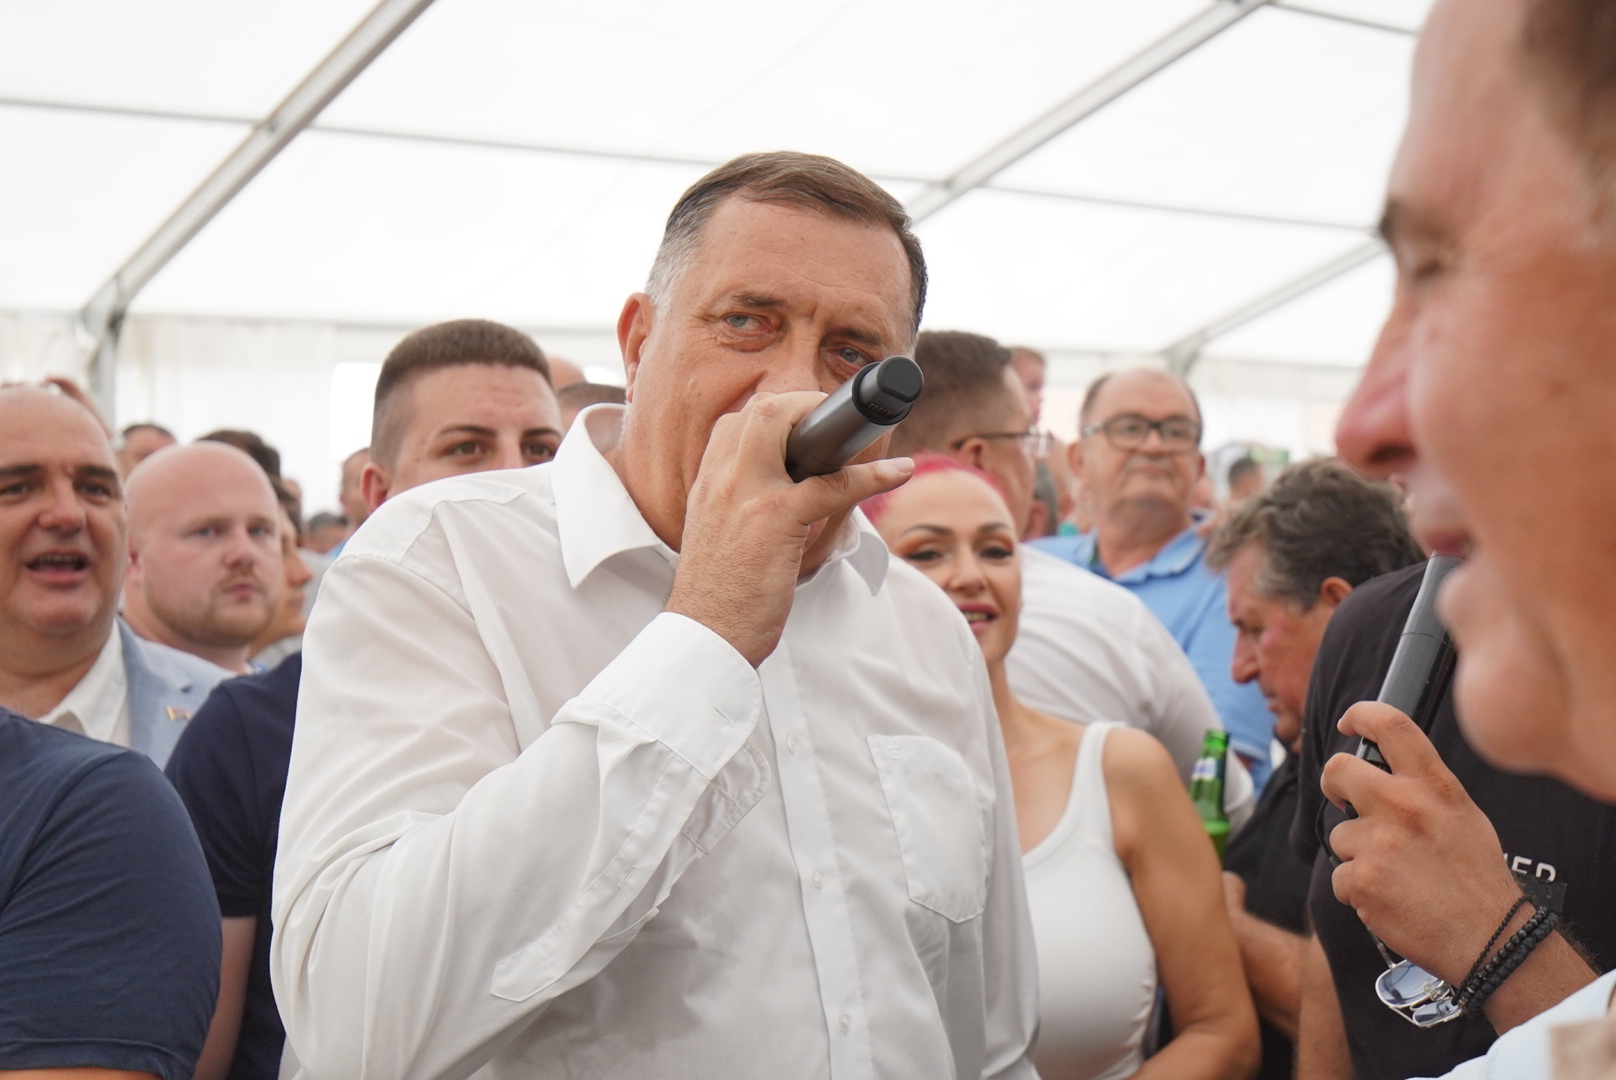 NIŠTA BEZ MIKROFONA Dodik pod šatorom zapjevao poznate hitove (VIDEO)